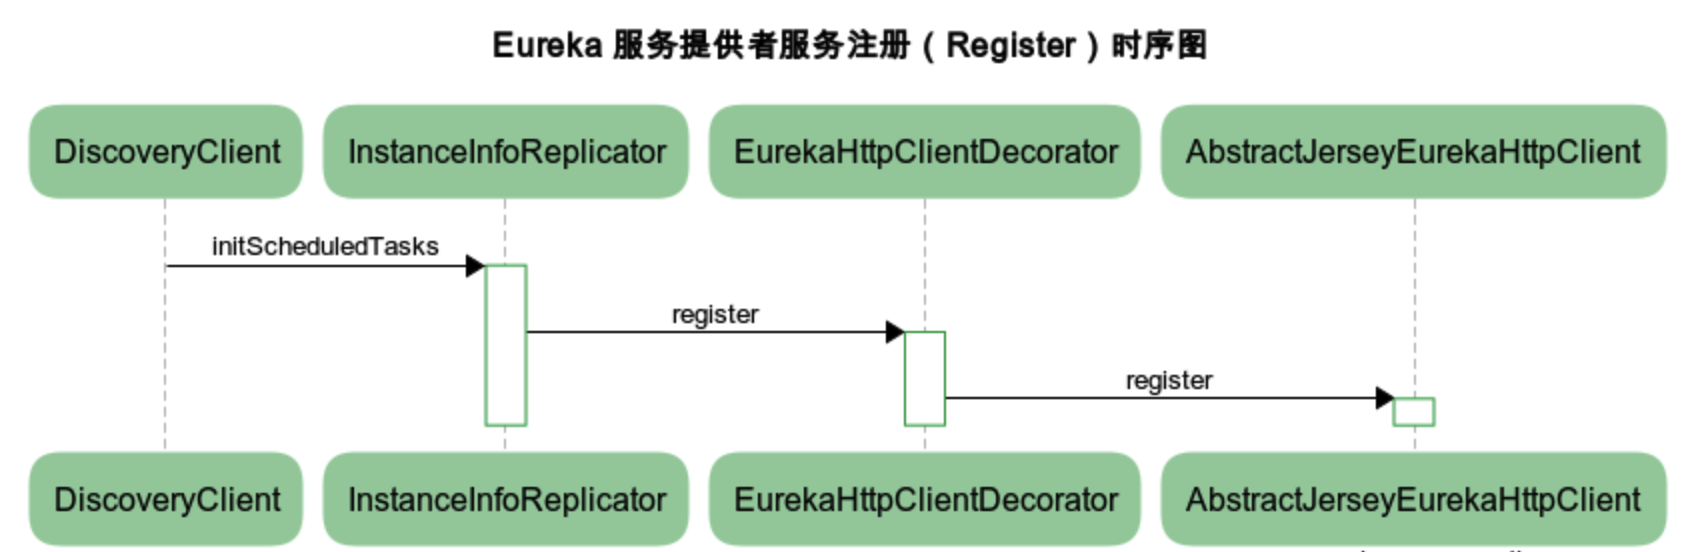 images/eureka-service-provider-register-sequence-chart.png